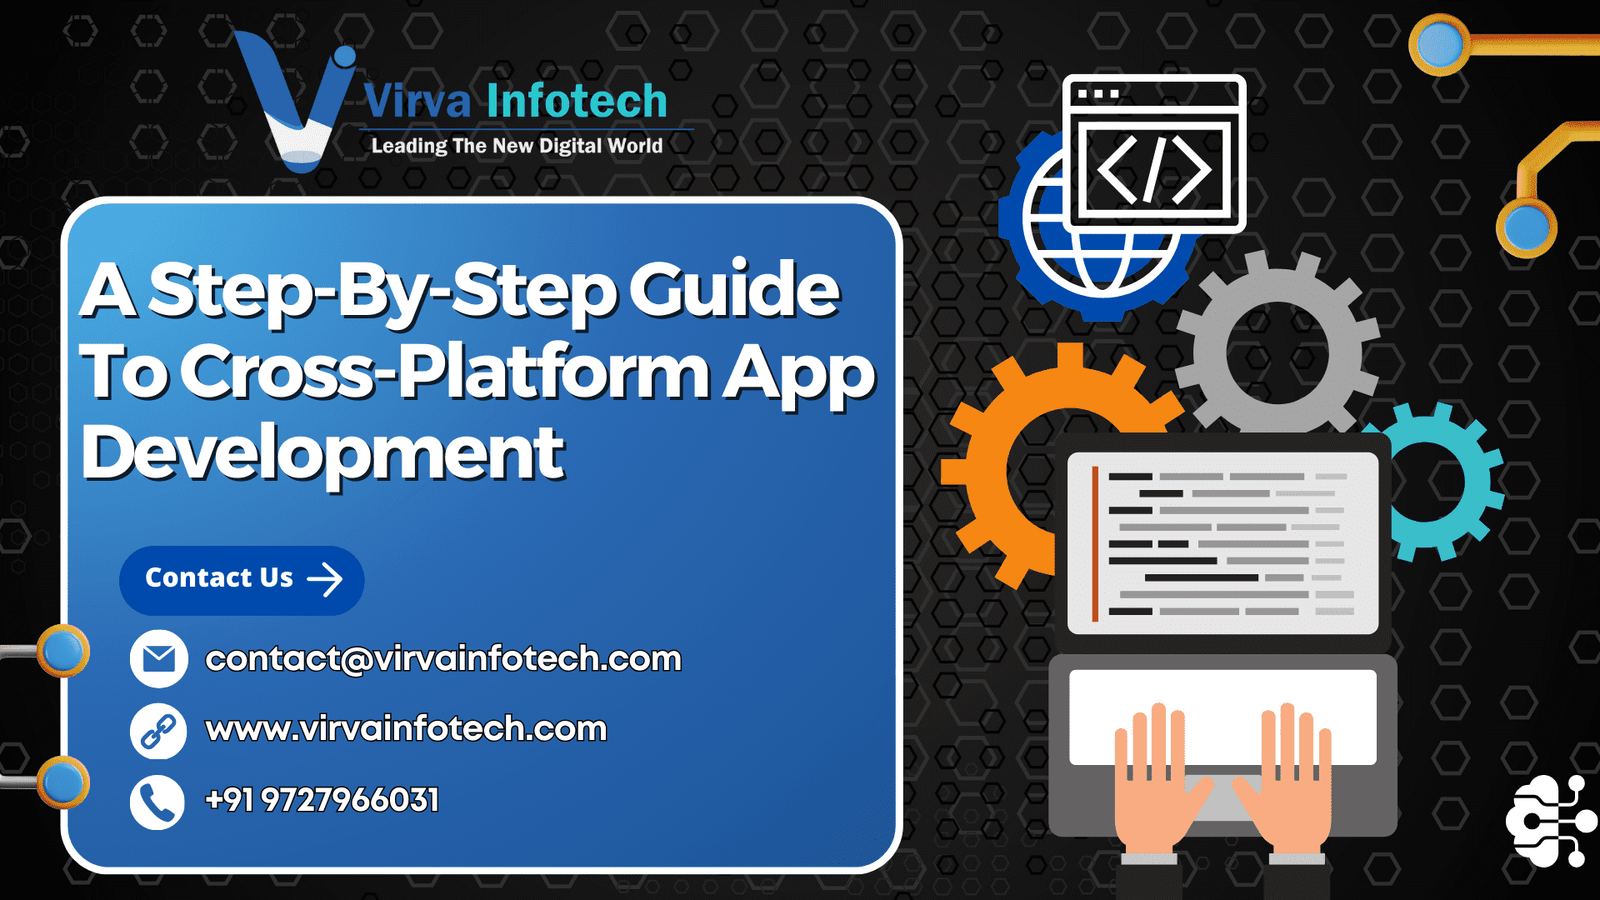 A Step-By-Step Guide To Cross-Platform App Development